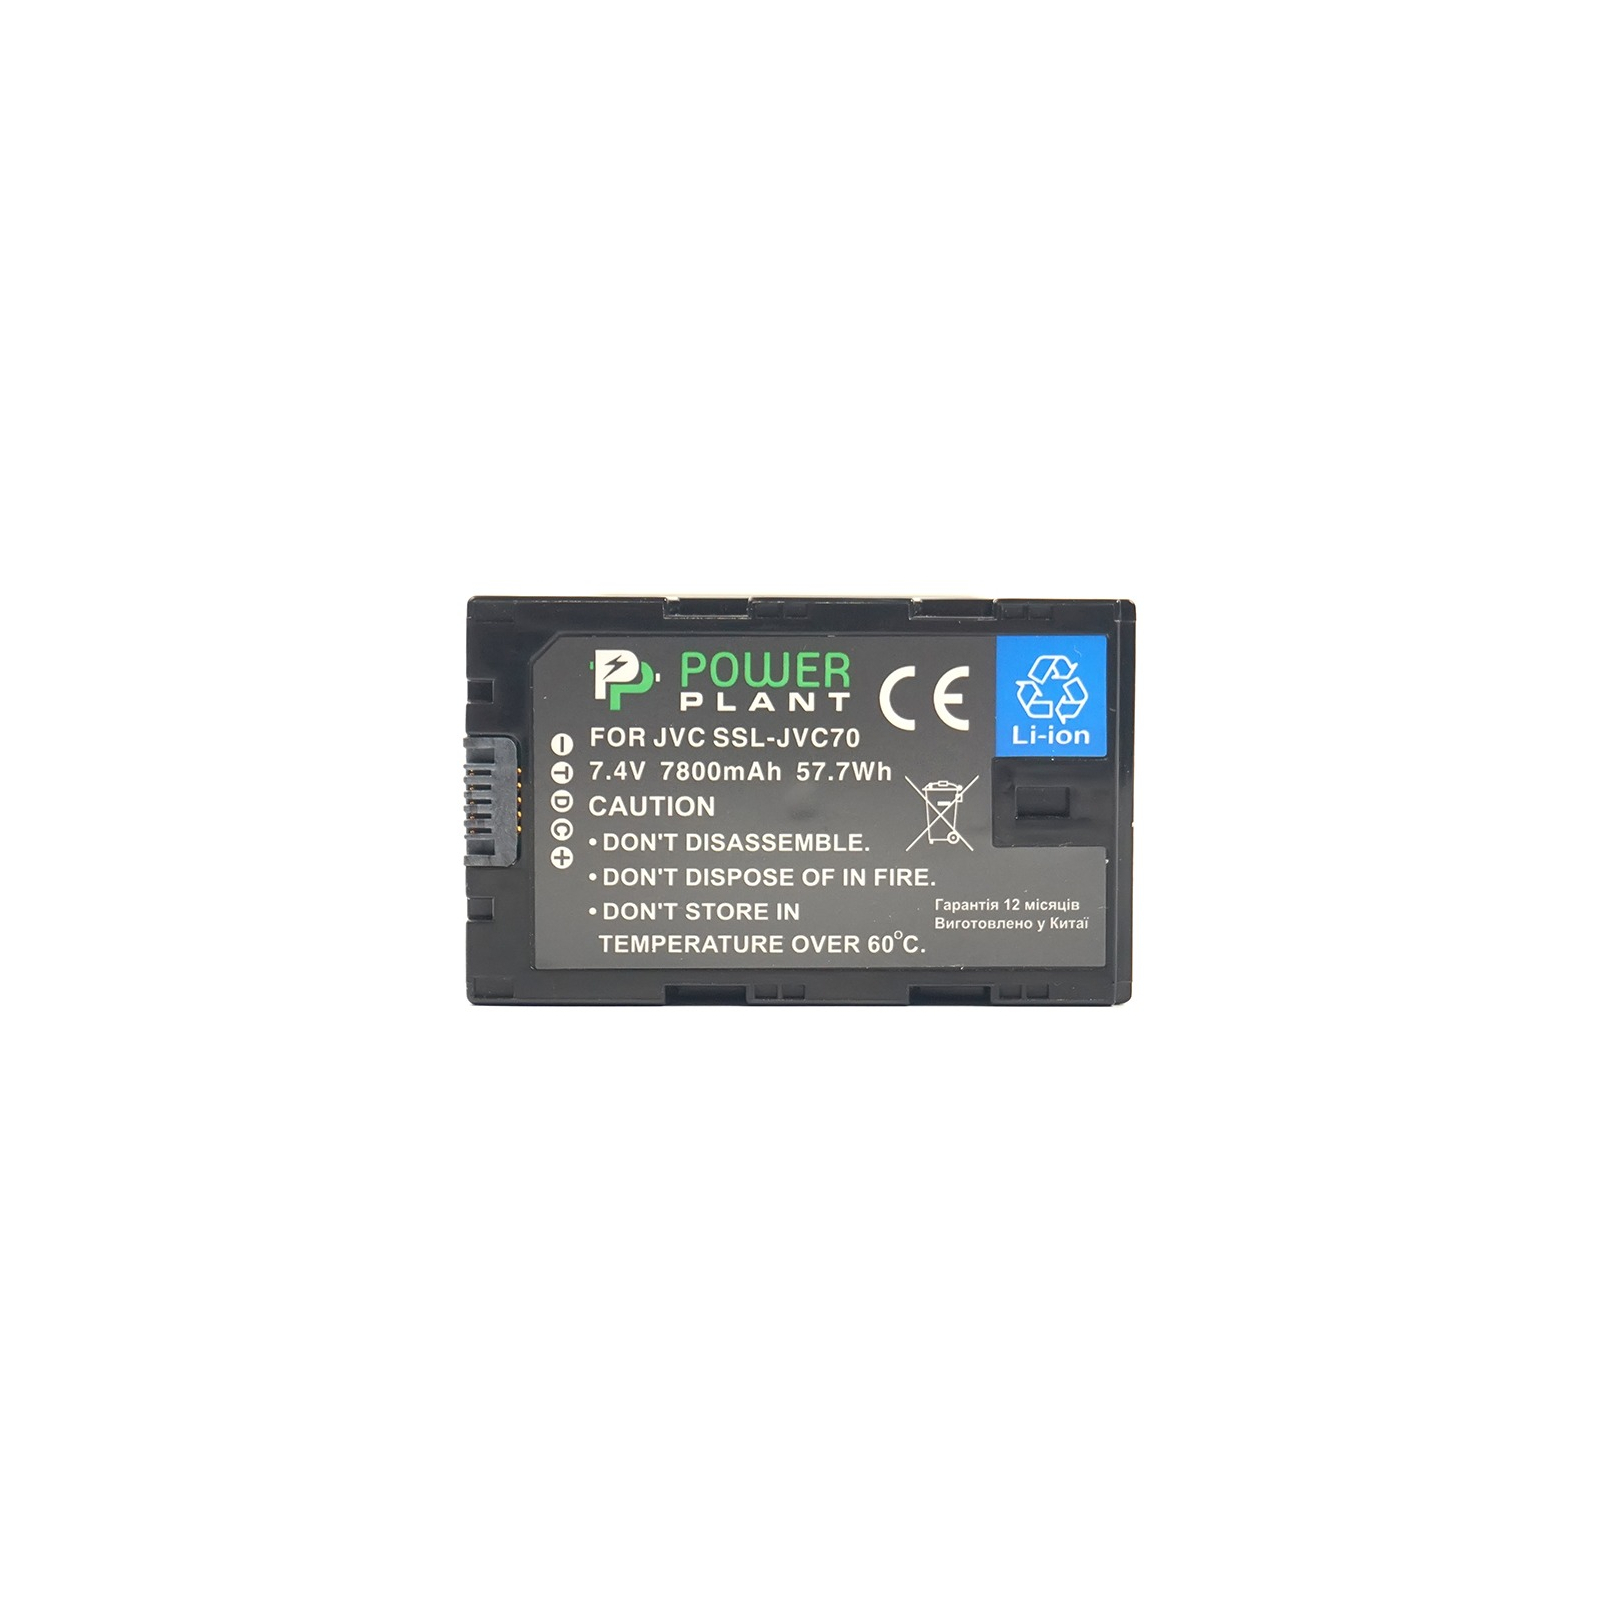 Аккумулятор к фото/видео PowerPlant JVC SSL-JVC70, 7800mAh (CB970063) изображение 2